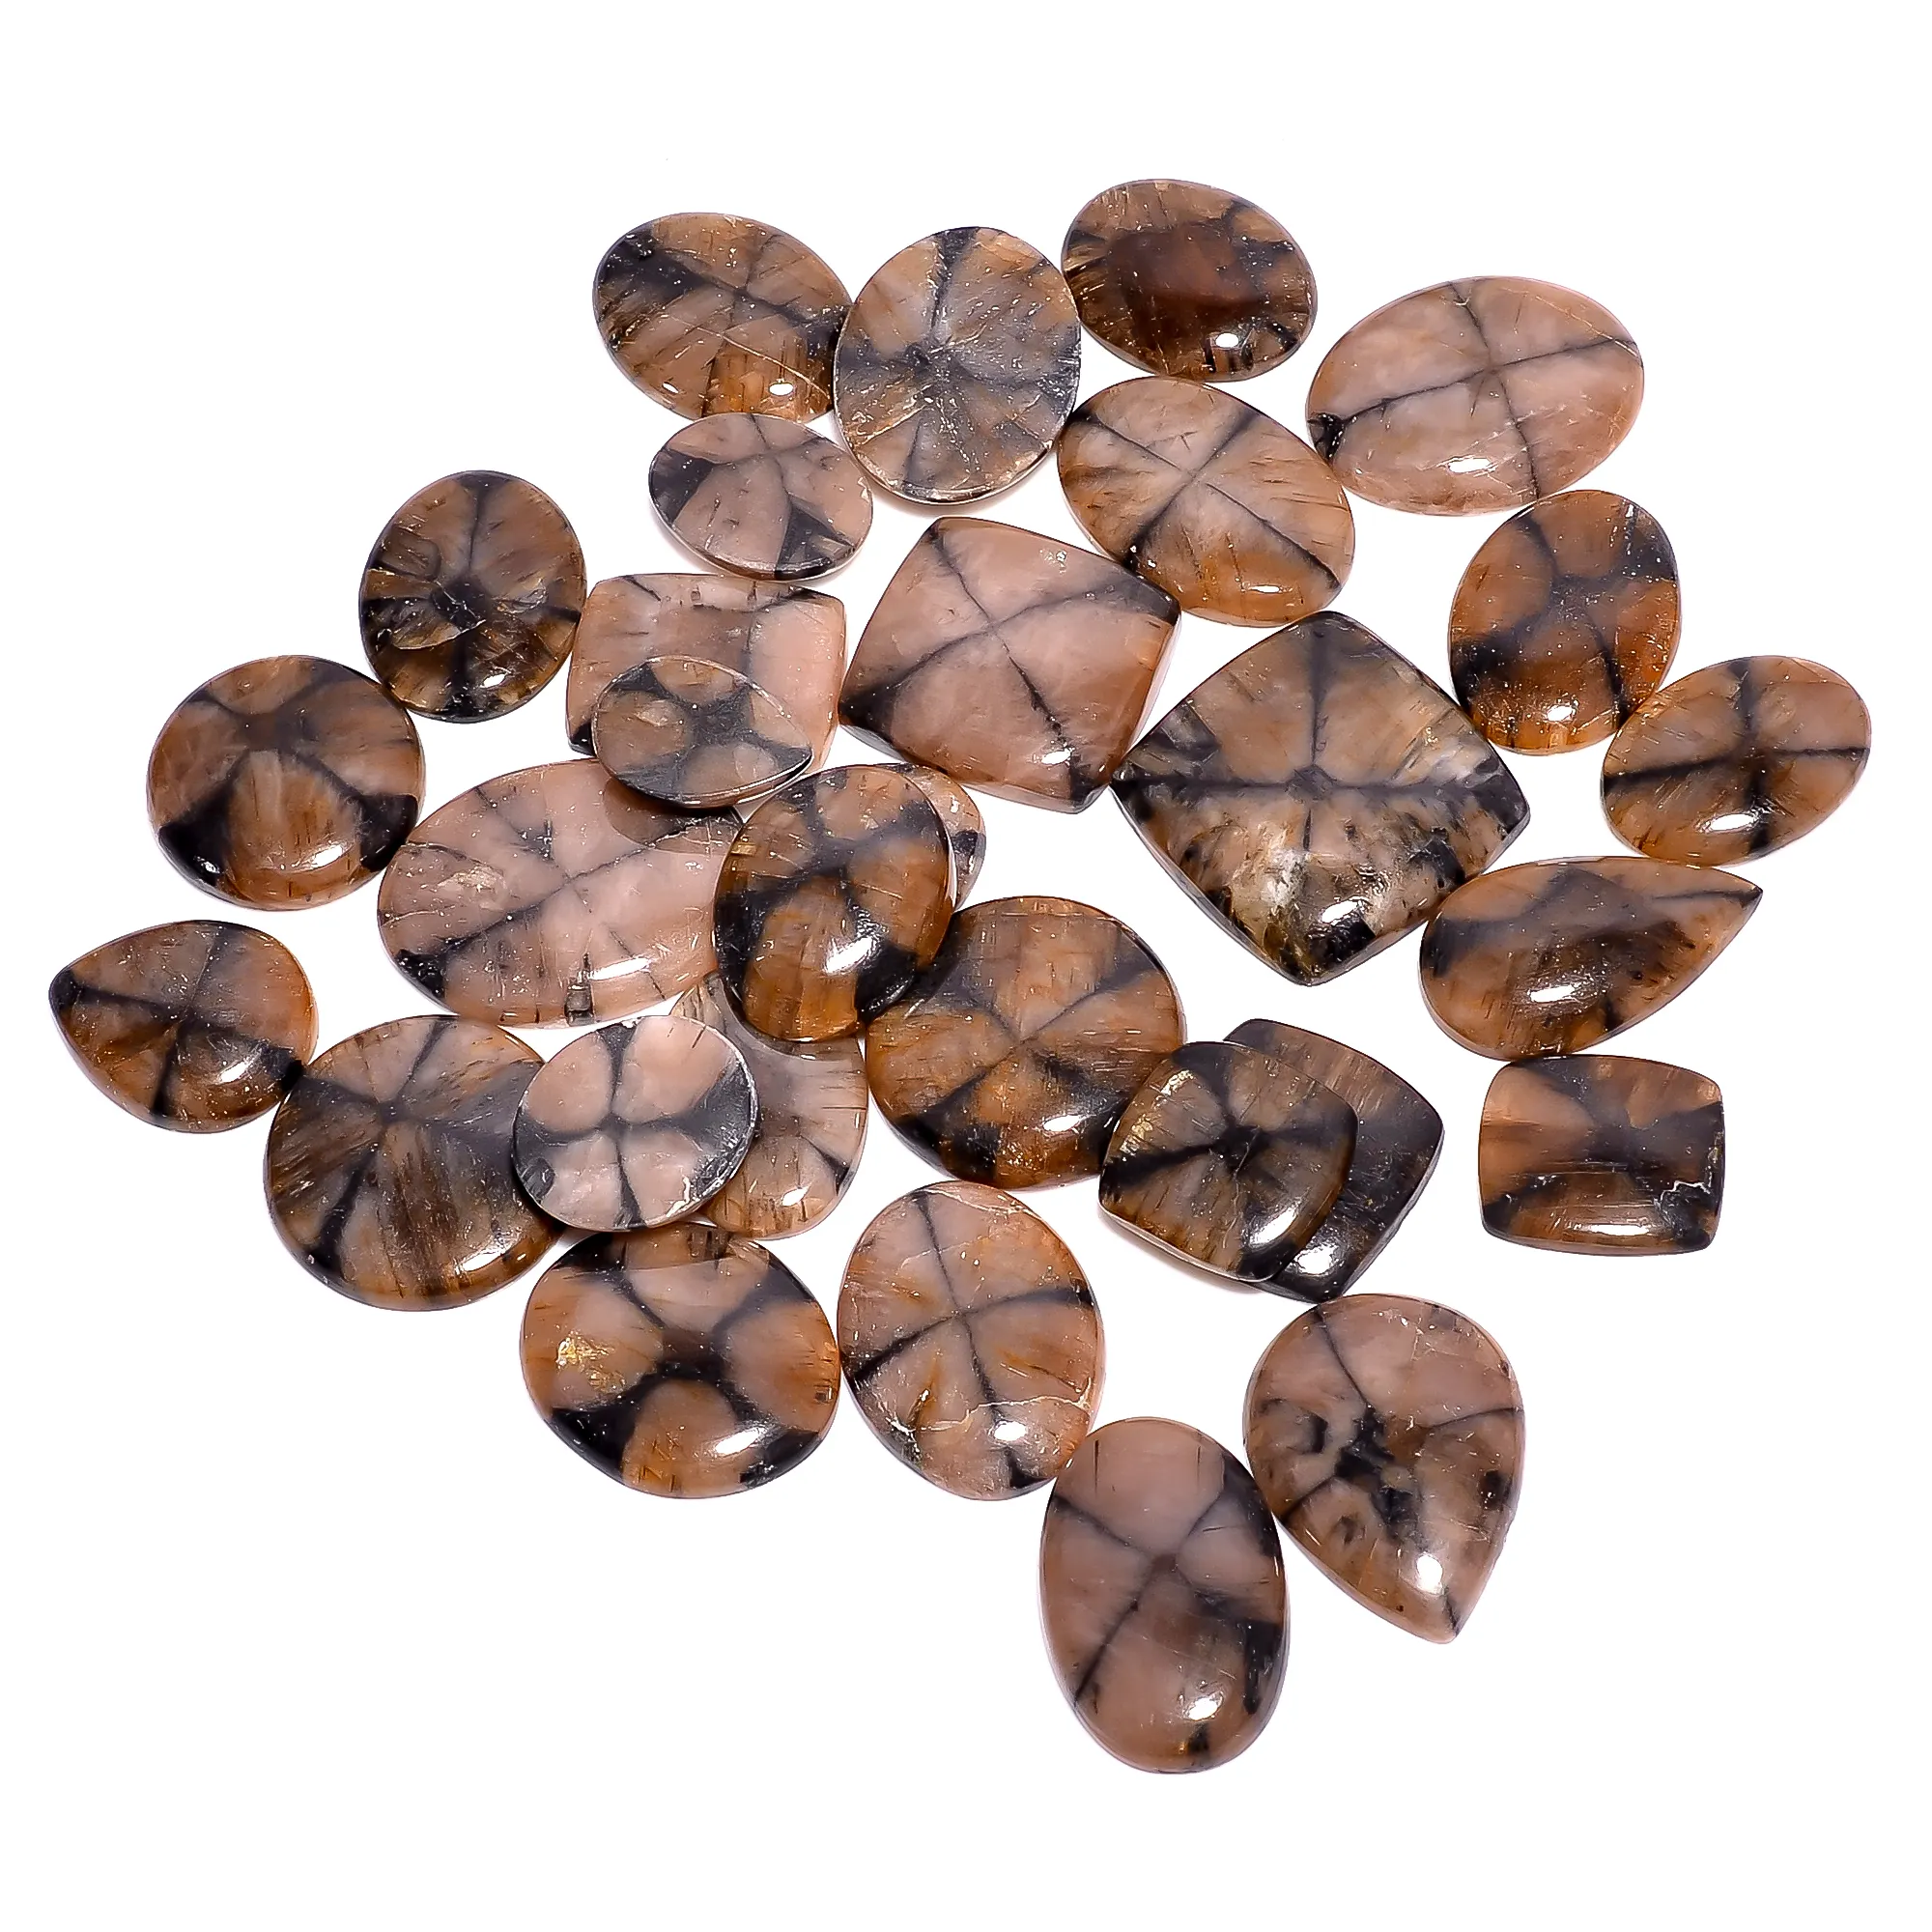 Batu permata longgar Chiastolite alami cabochon banyak grosir untuk liontin atau kawat bungkus perhiasan membuat batu permata alami Chiastolite